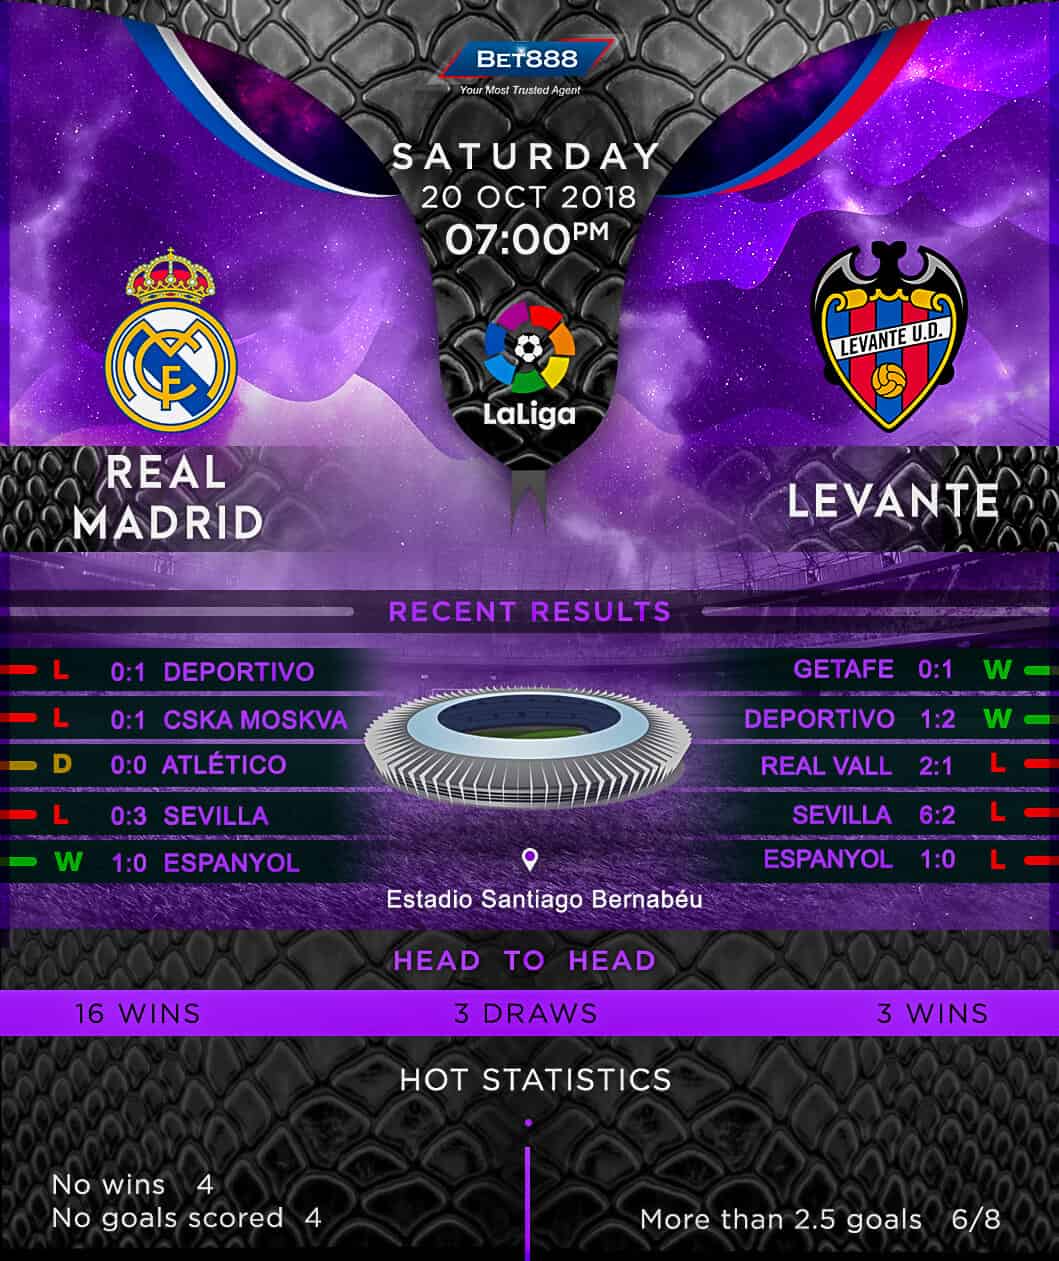 Real Madrid vs Levante 20/10/18